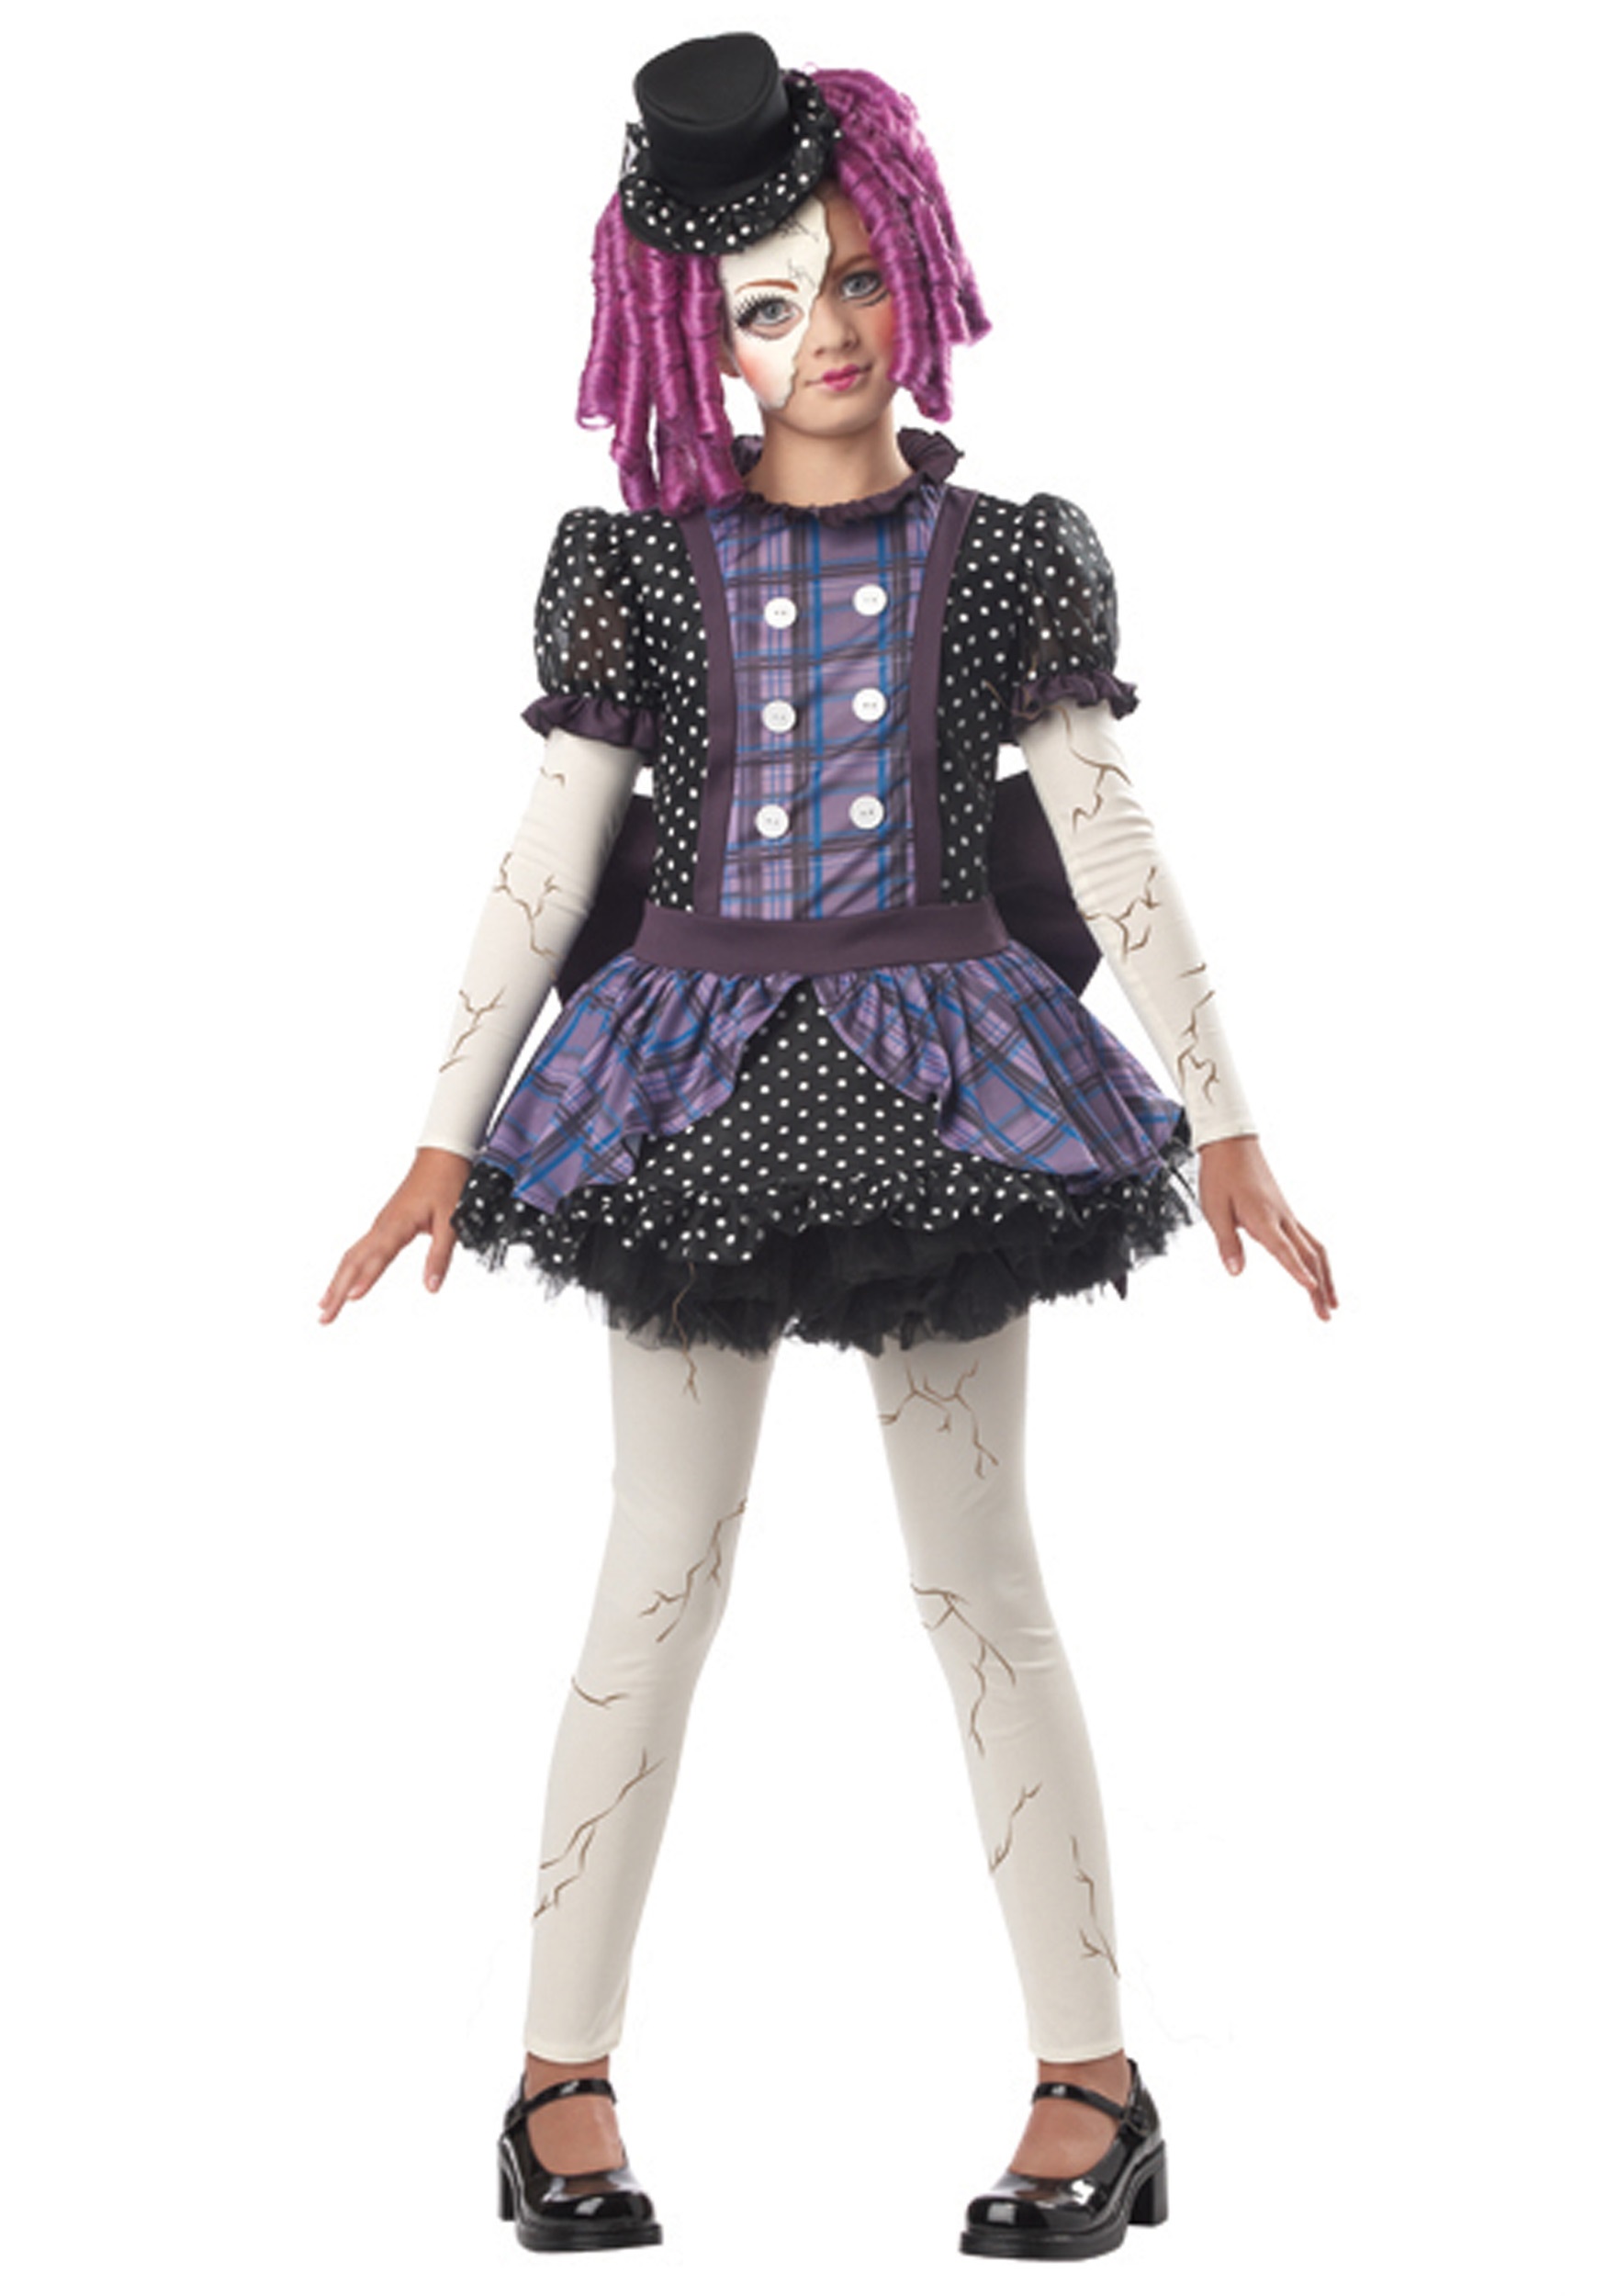 creepy doll costume girl